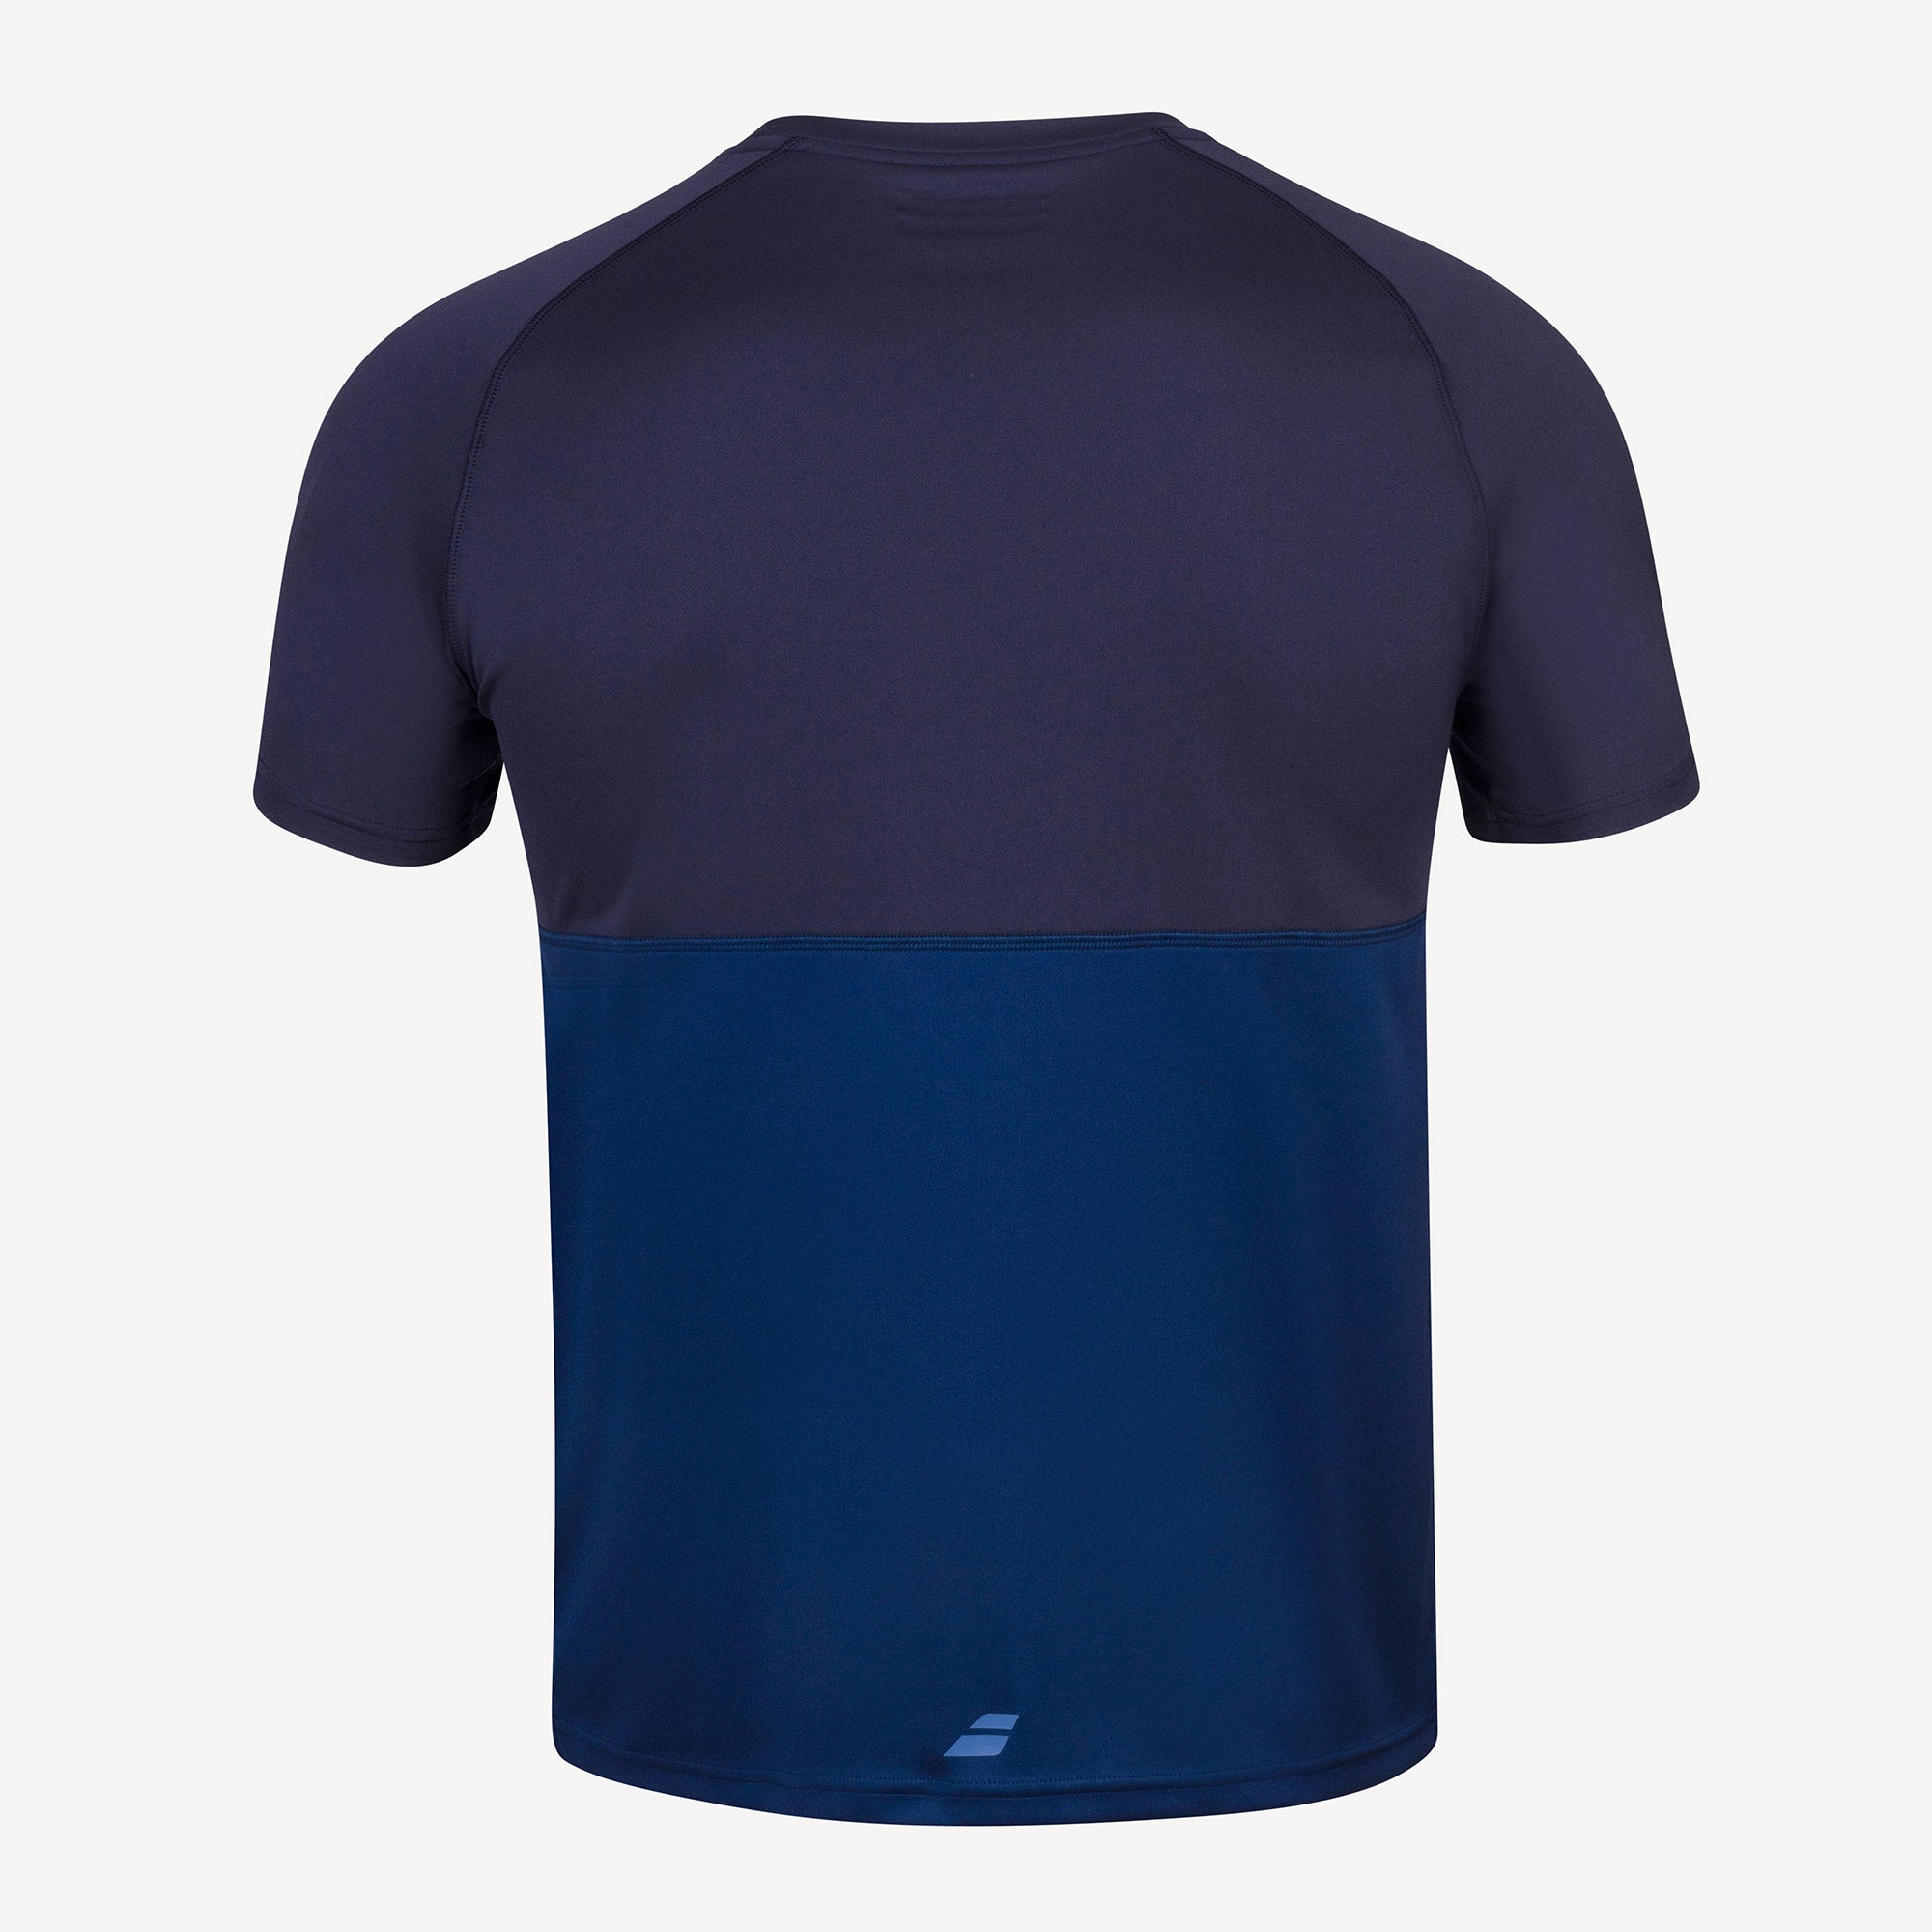 Babolat Play Club Men's Tennis Shirt Blue (2)